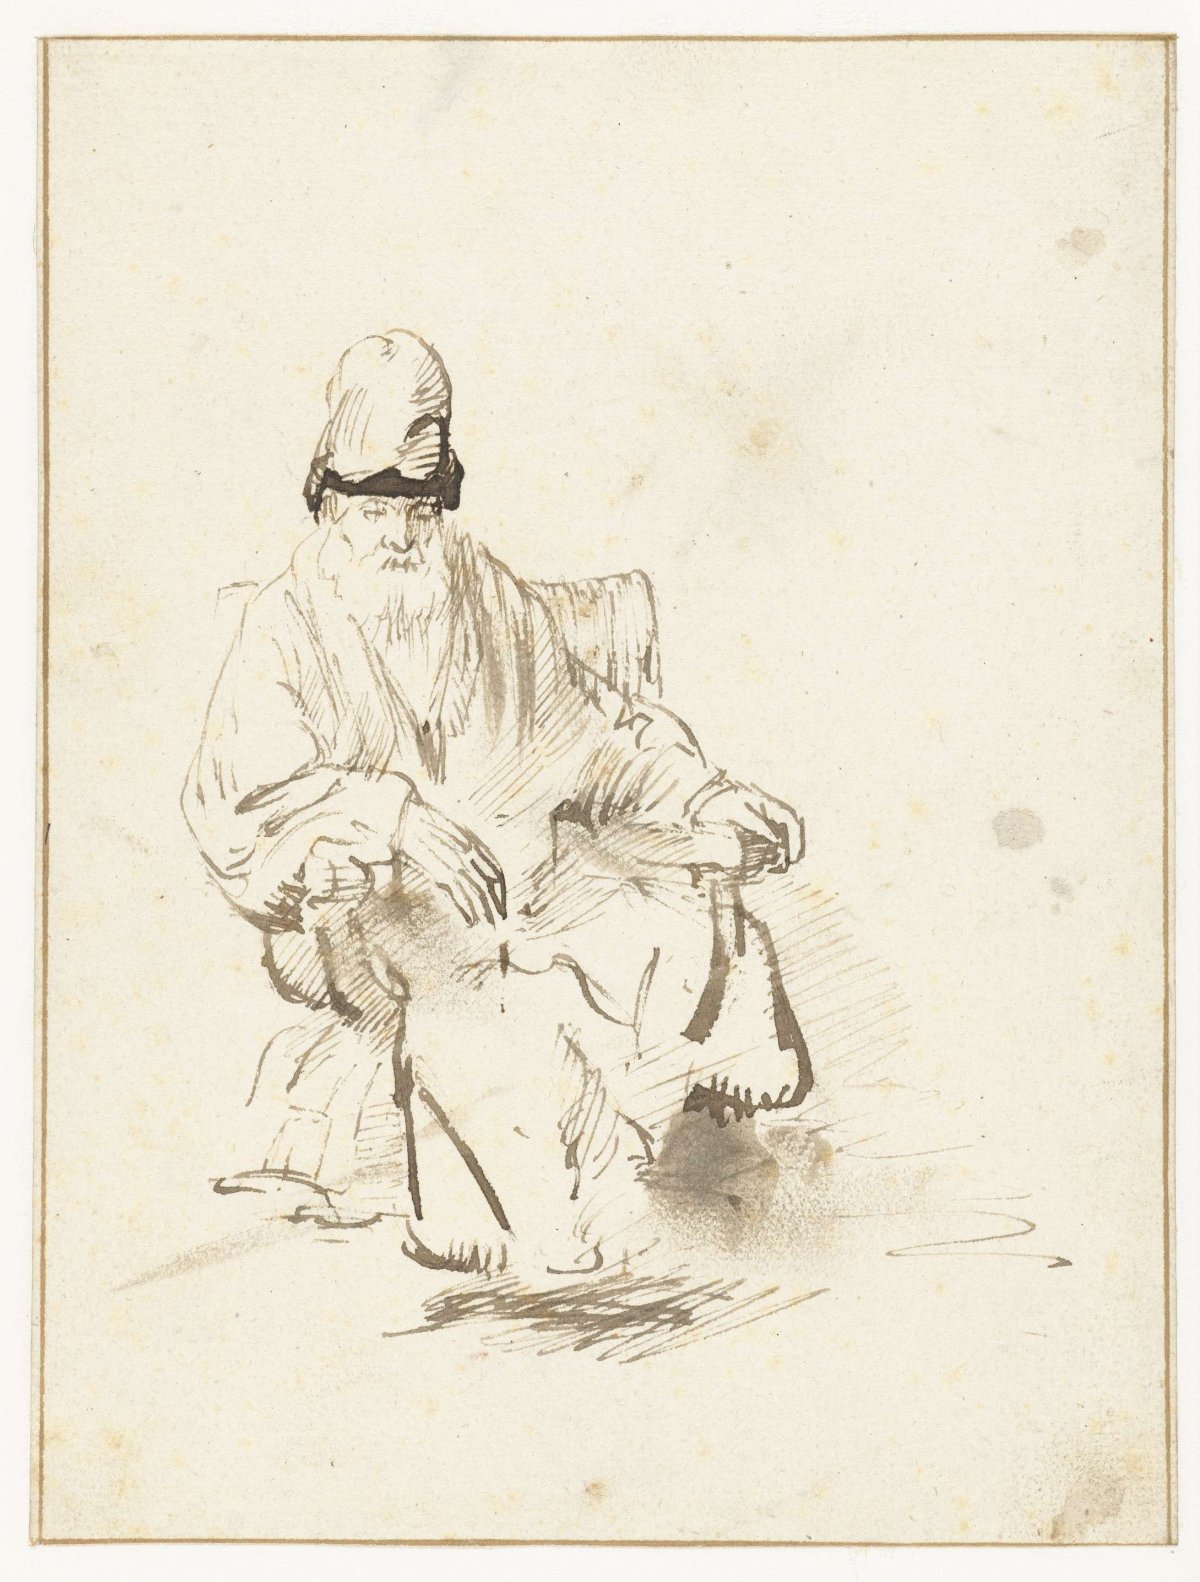 Seated Old Man with Tall Cap, Rembrandt van Rijn, c. 1645 - c. 1655